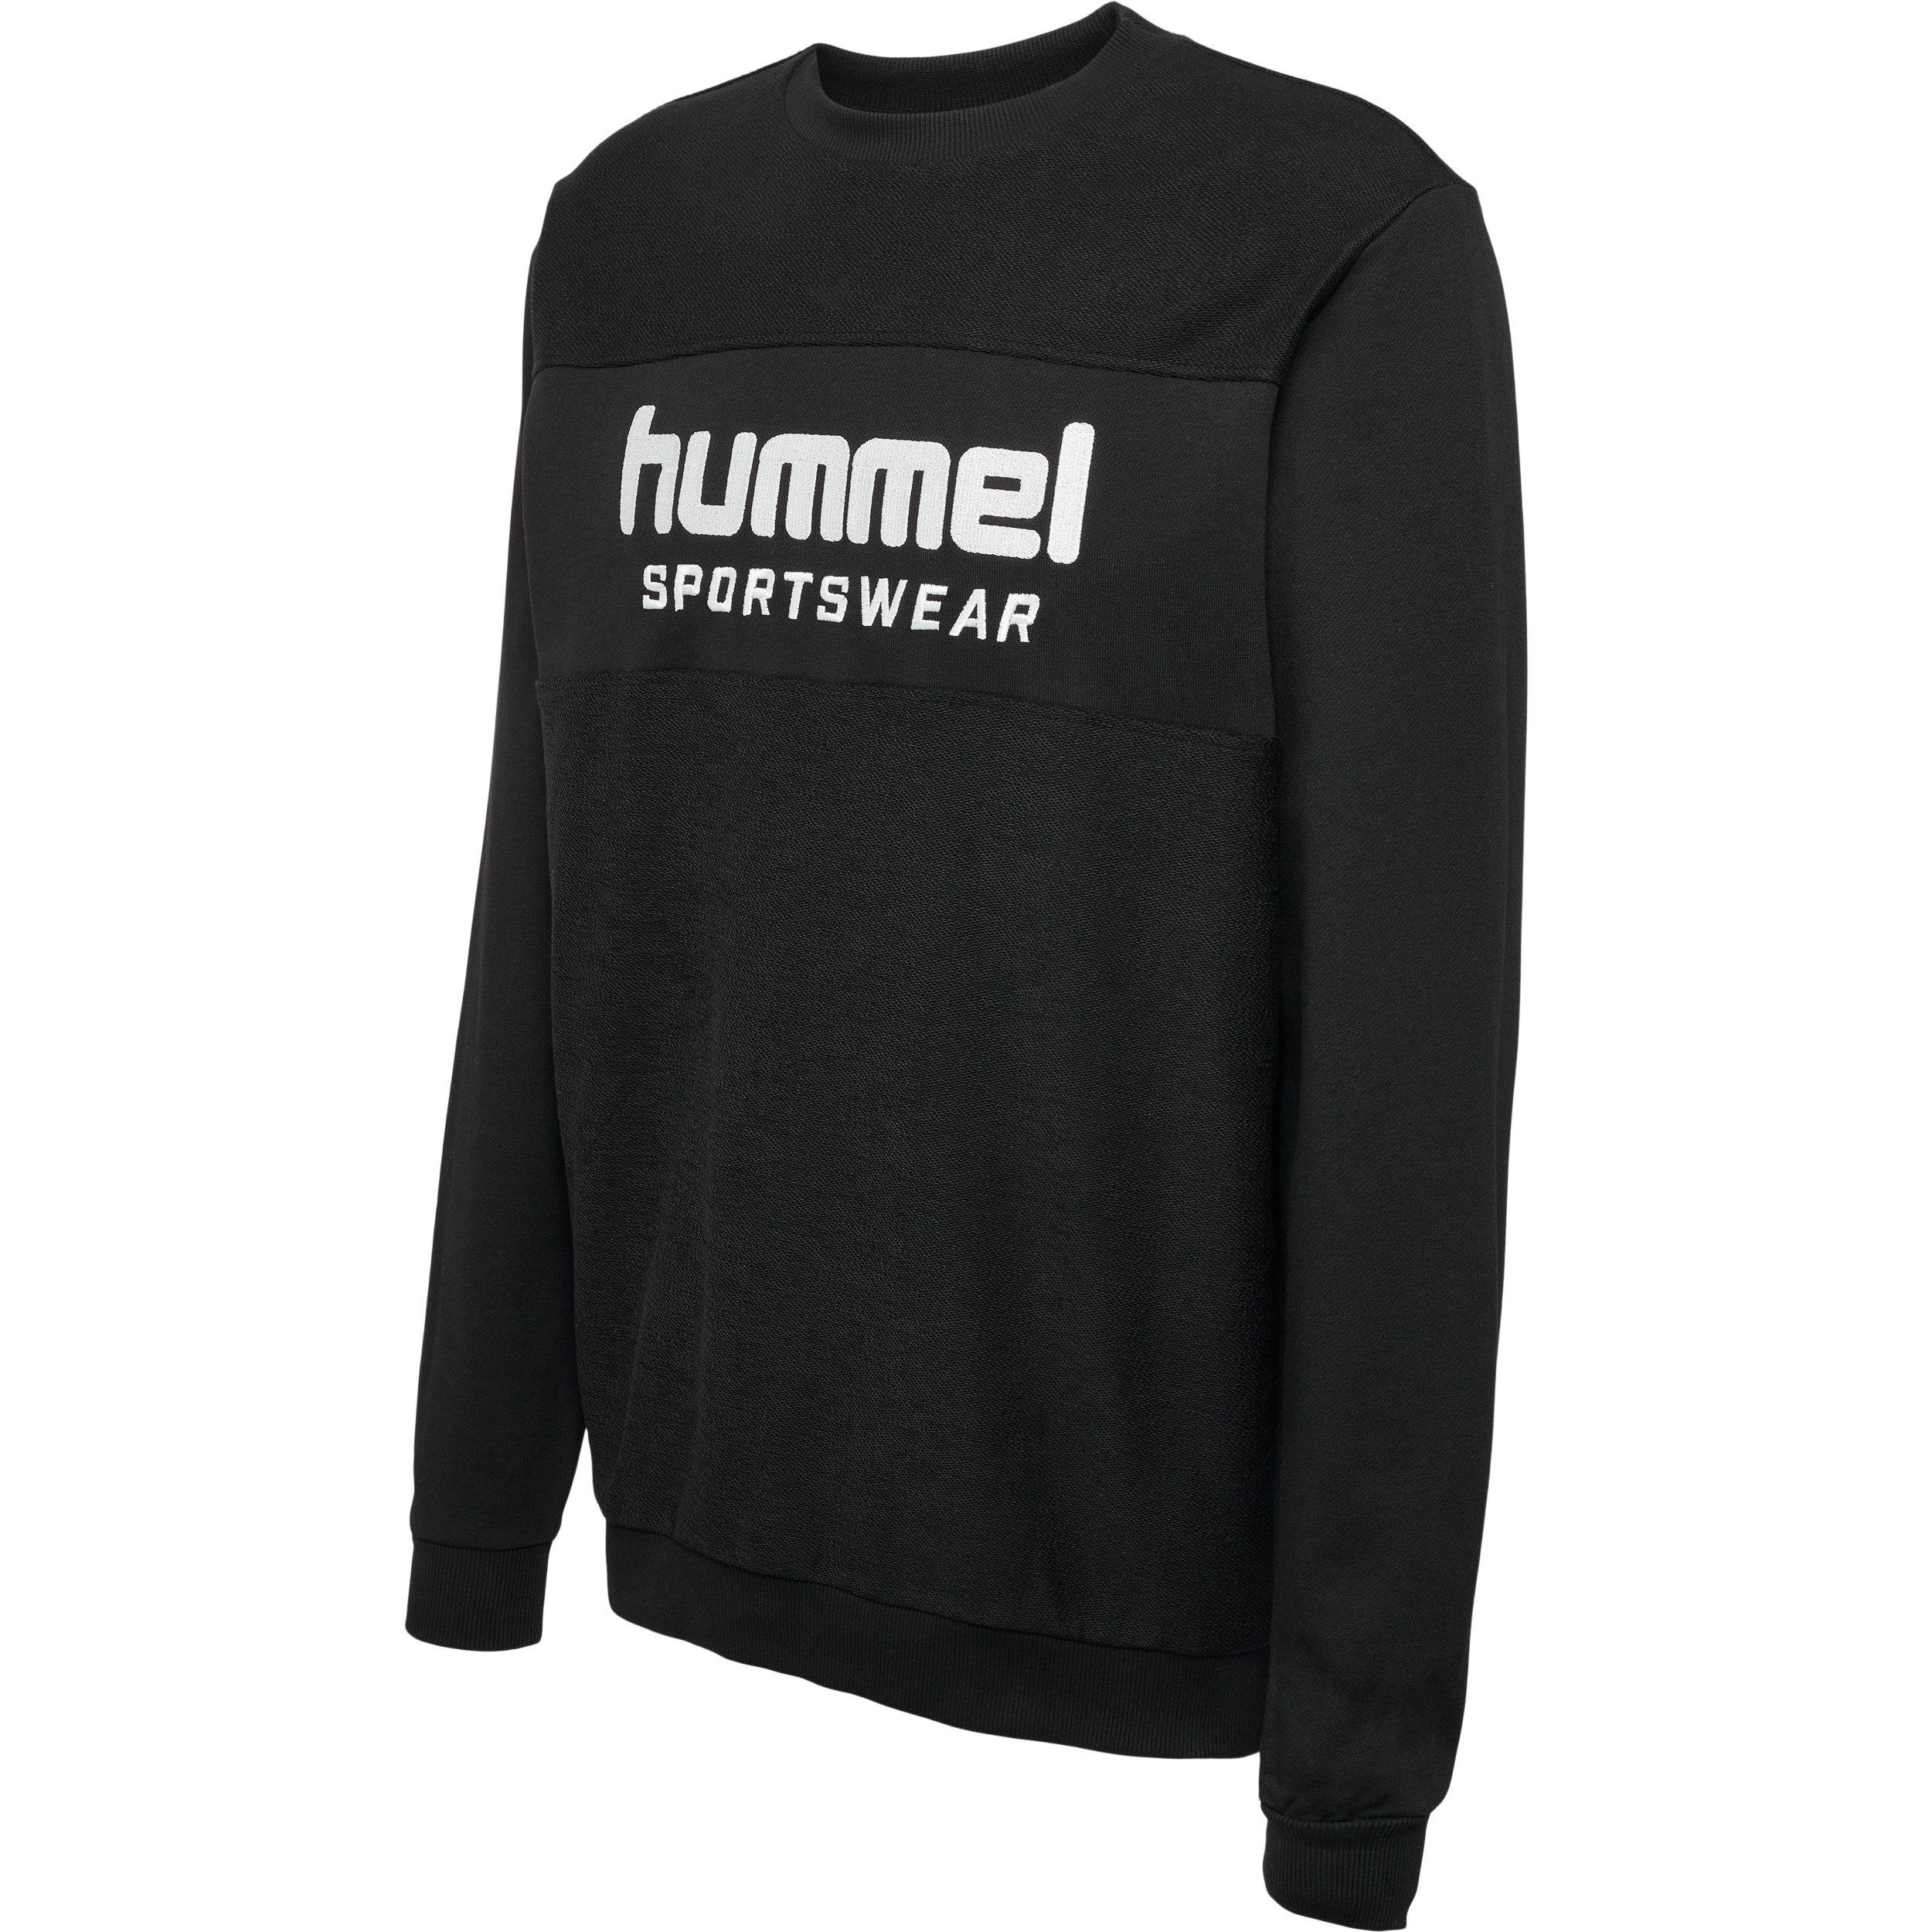 KYLE hummel SWEATSHIRT Sweatshirt hmlLGC black